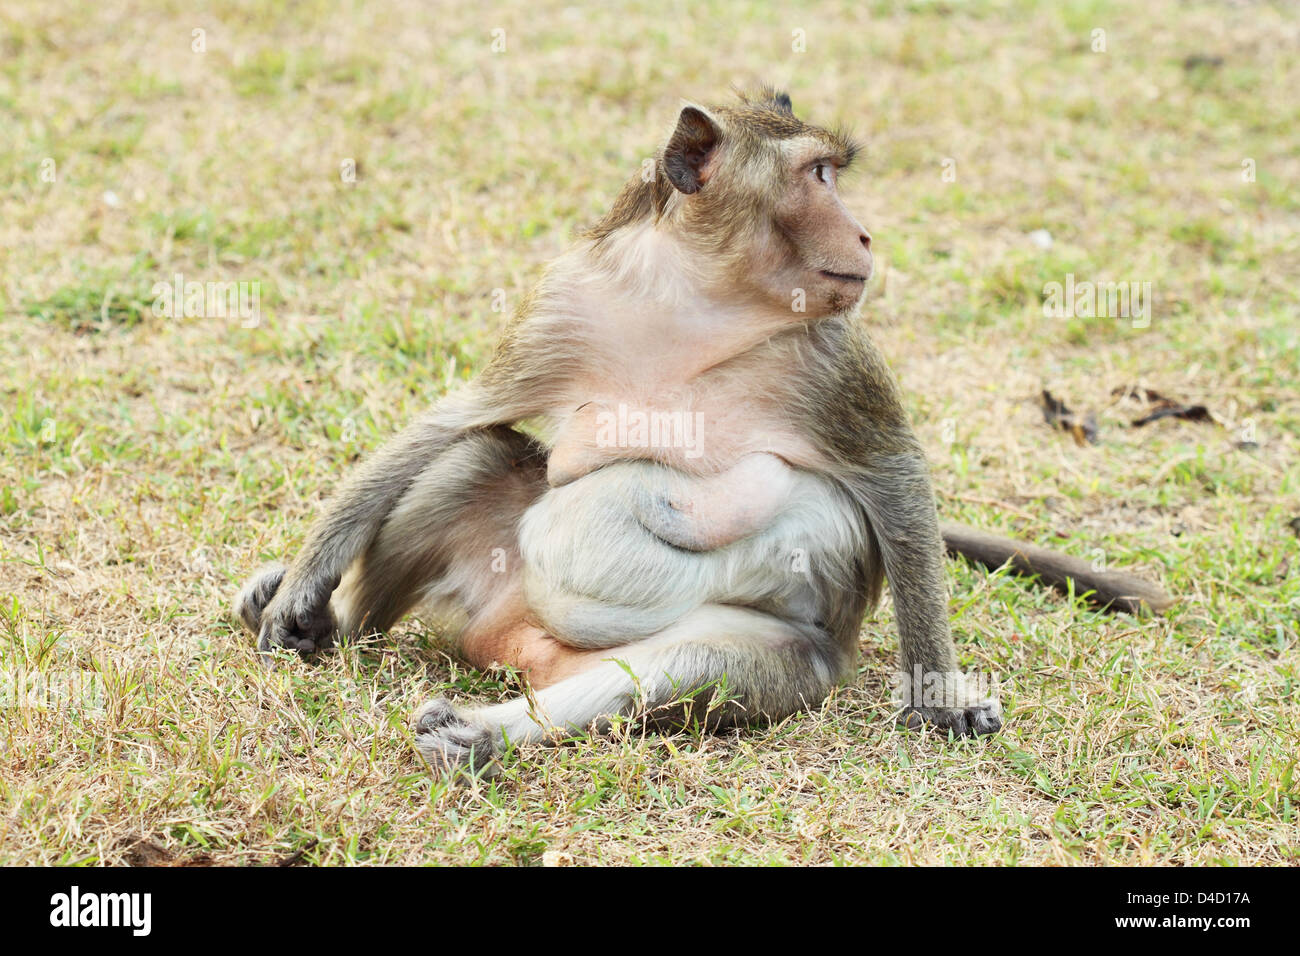 fat monkey on the grass Stock Photo